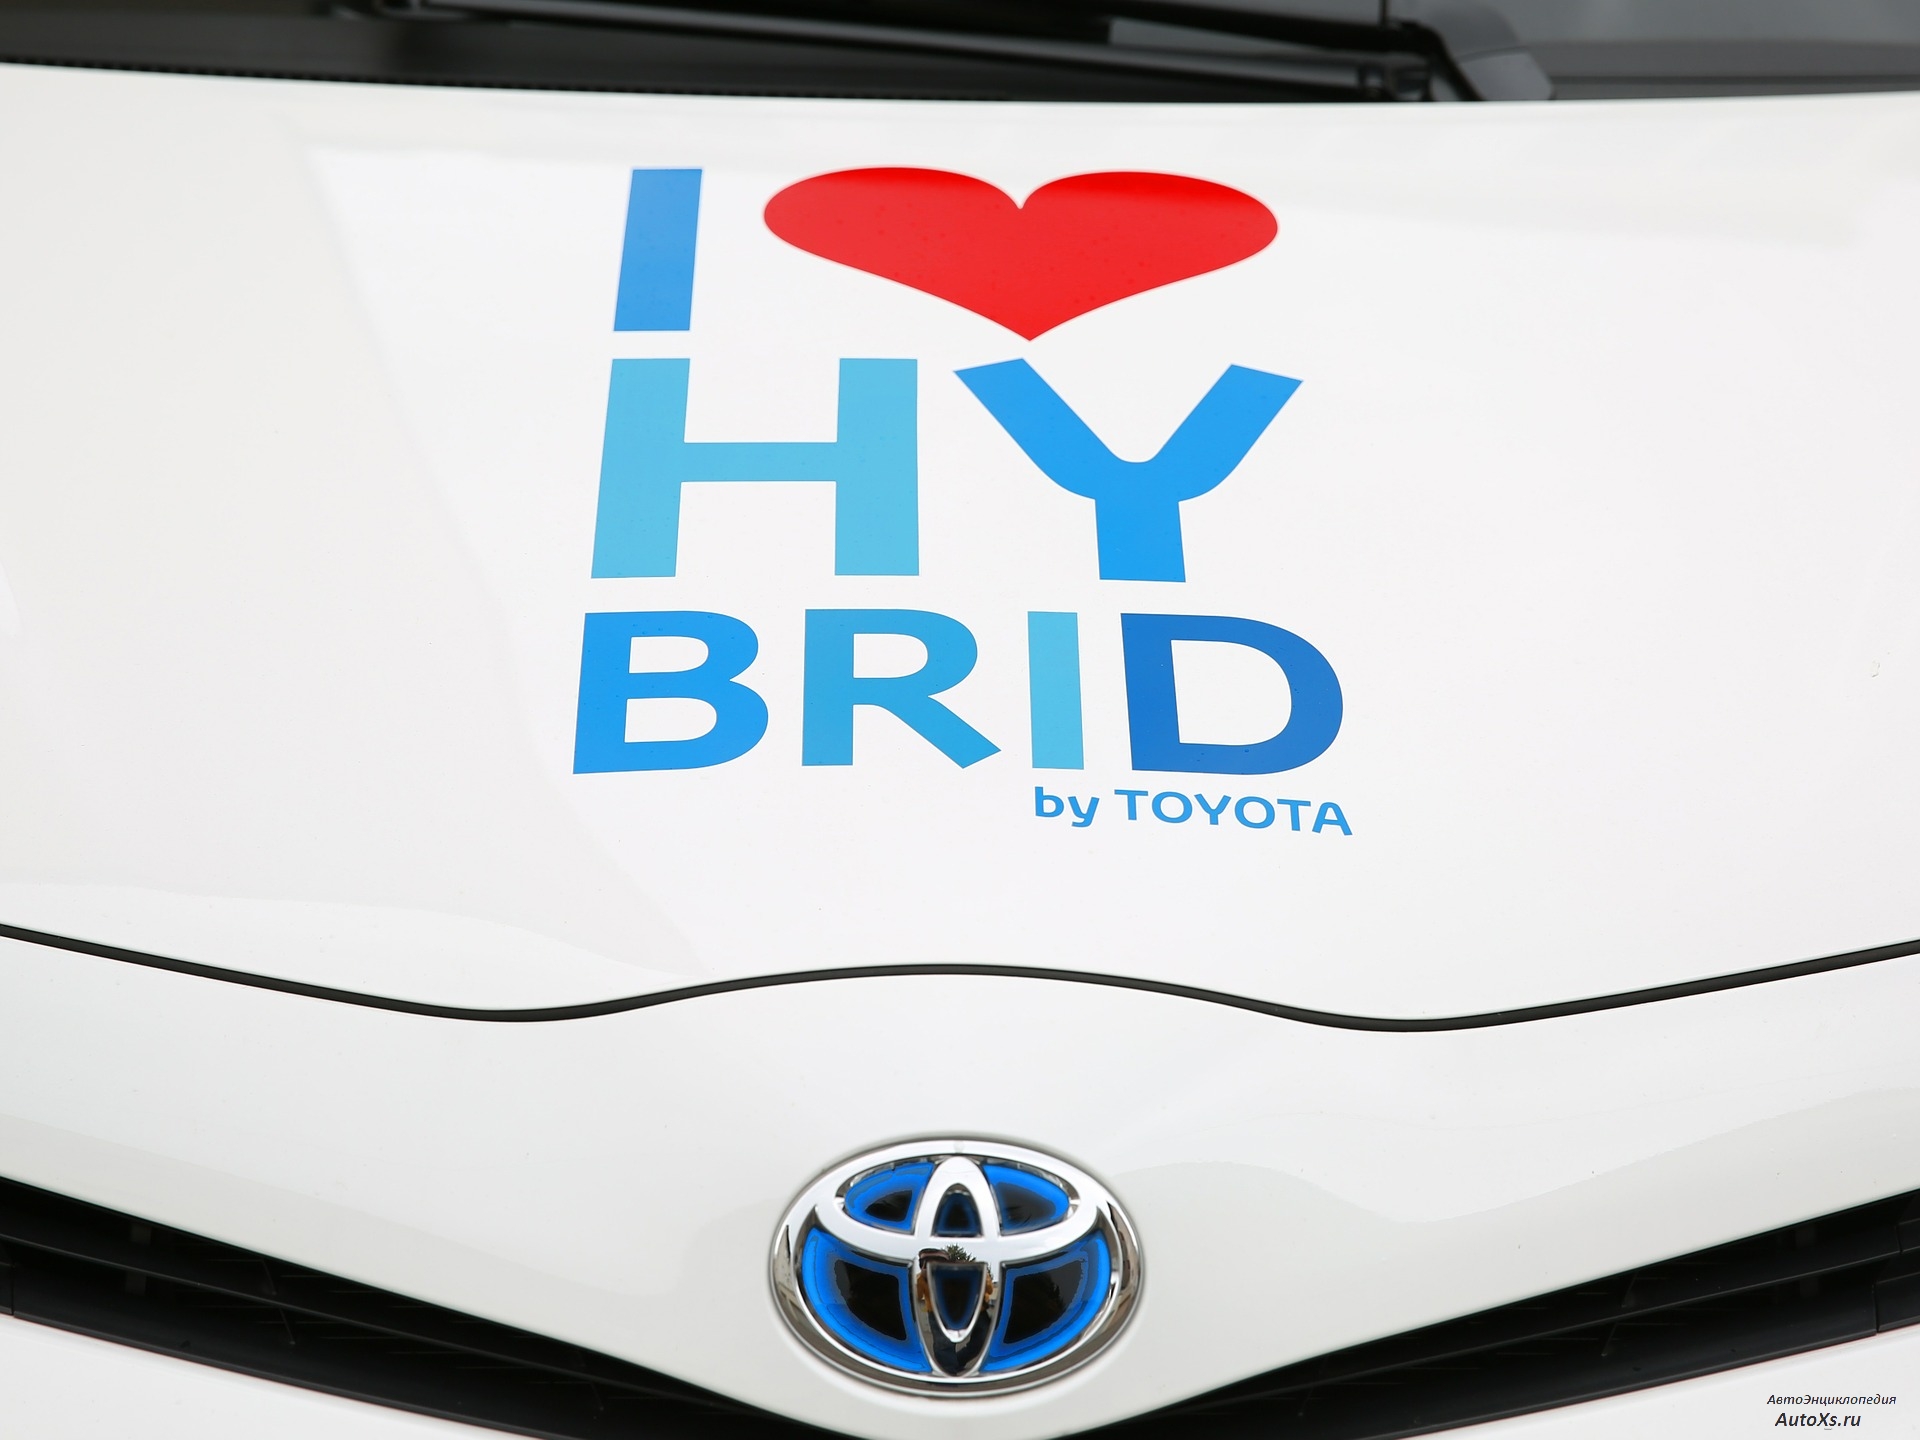 Написали гибрид. Логотип гибридного автомобиля. Toyota Hybrid logo. Машина на которой написано Hybrid. Hybrid car надпись.